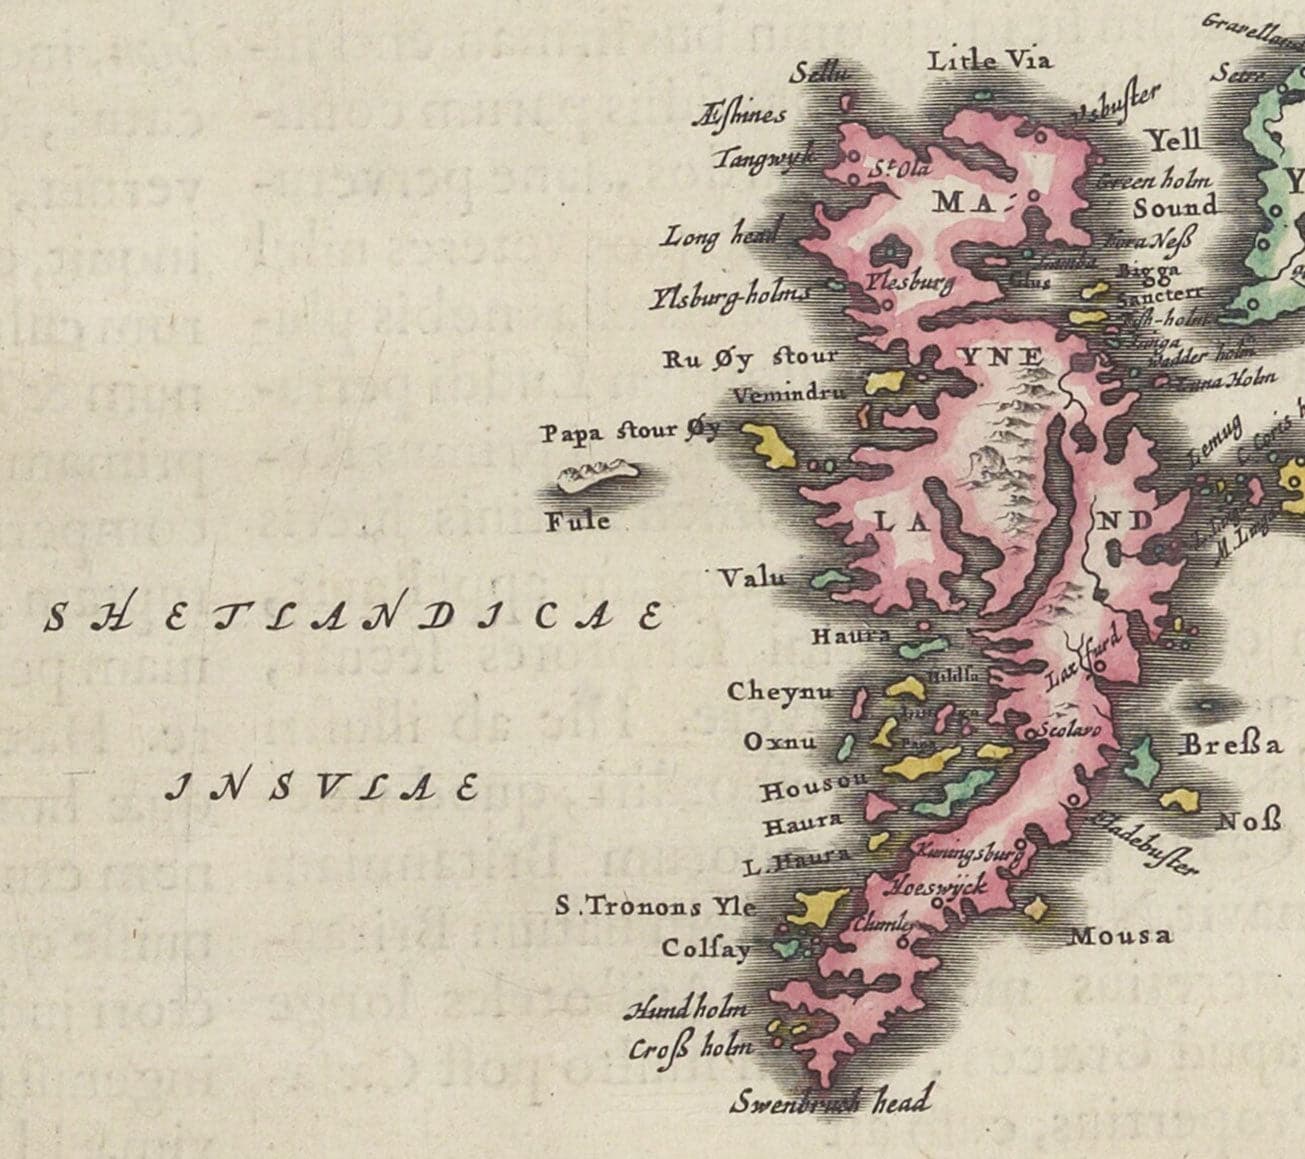 Old Map of Scotland, Shetland Isles and Orkney in 1654 by Joan Blaeu from the Theatrum Orbis Terrarum Sive Atlas Novus